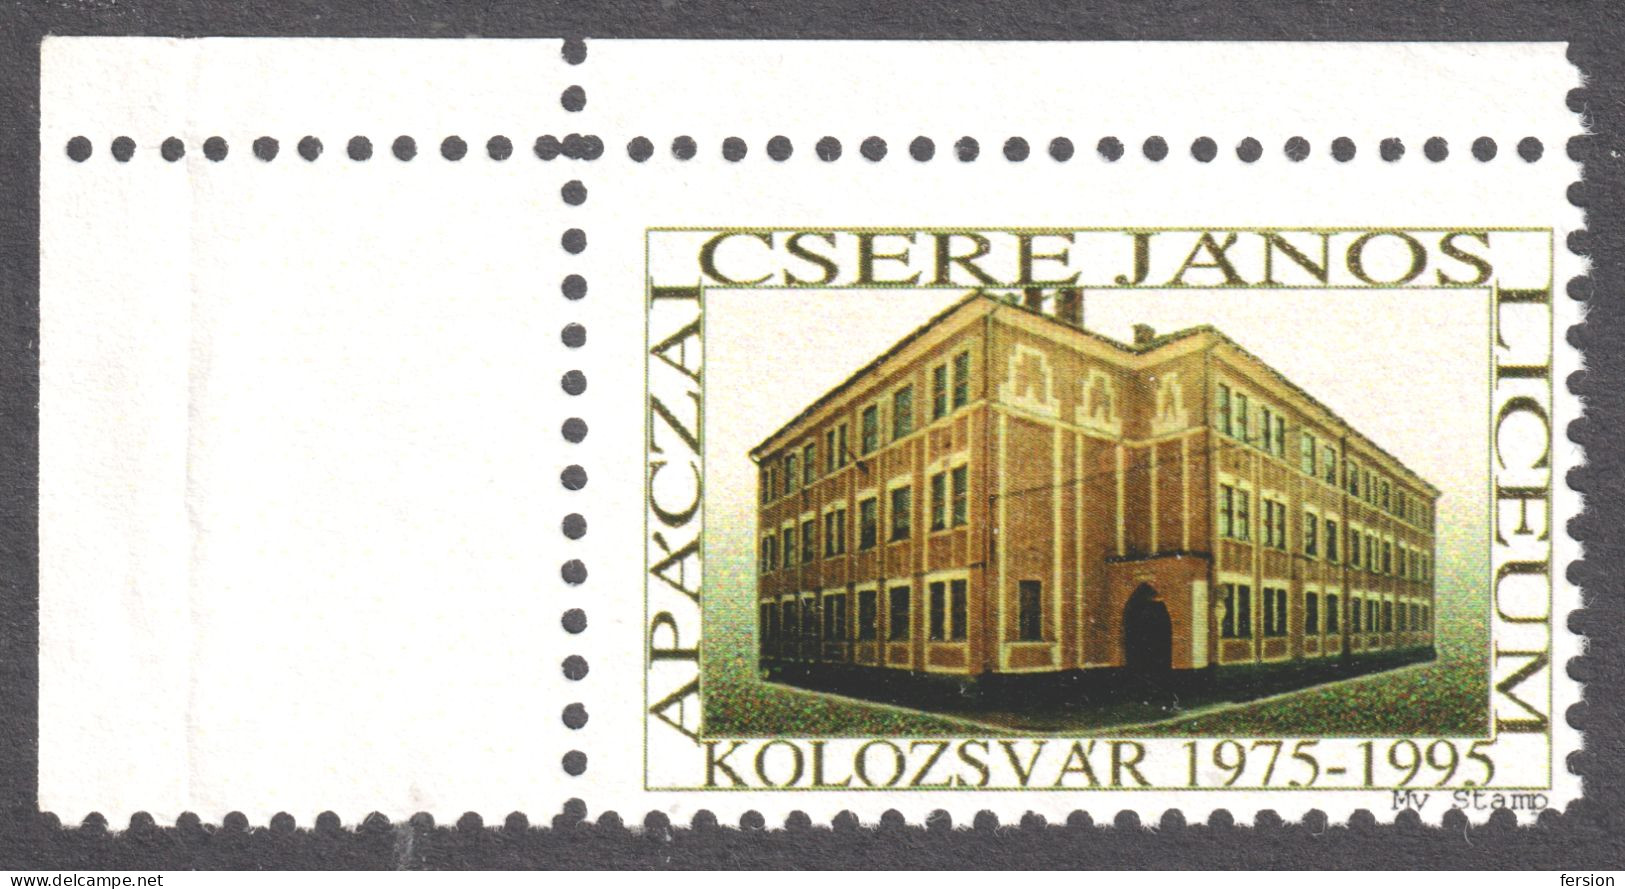 Transylvania Erdély Liceul Apaczai Csere Janos CLUJ Kolozsvár LICEUM LABEL CINDERELLA VIGNETTE 1995 Hungary My Stamp - Transsylvanië